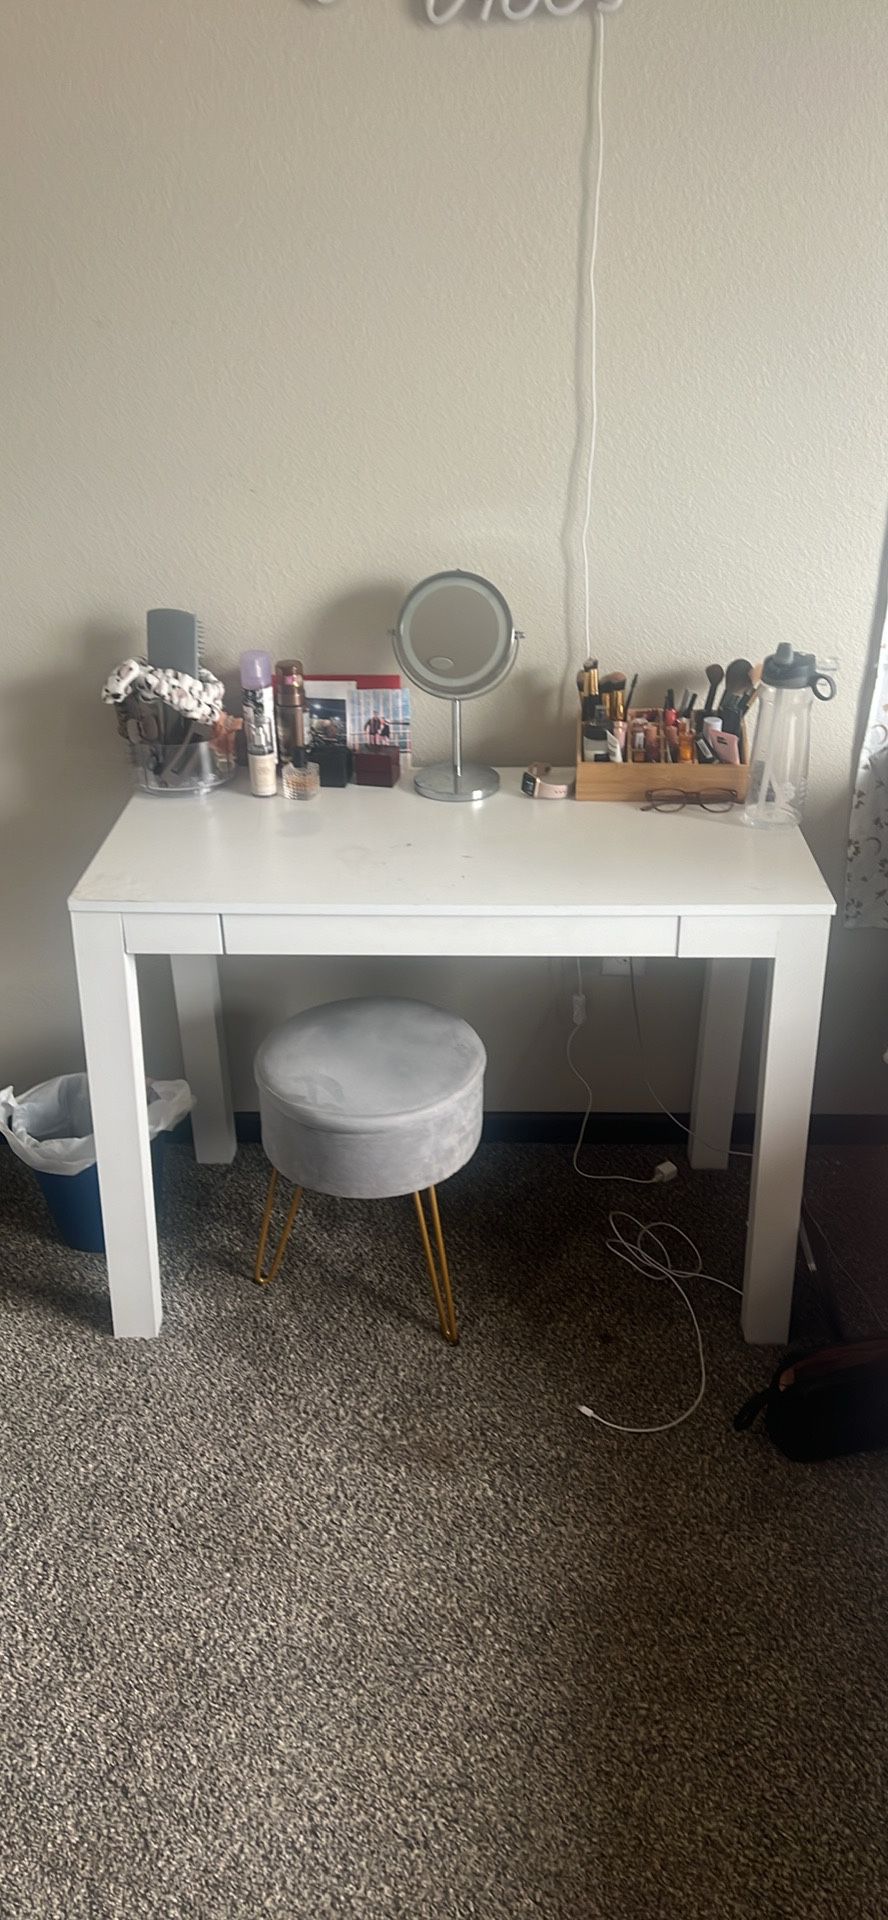 Desk / Vanity 